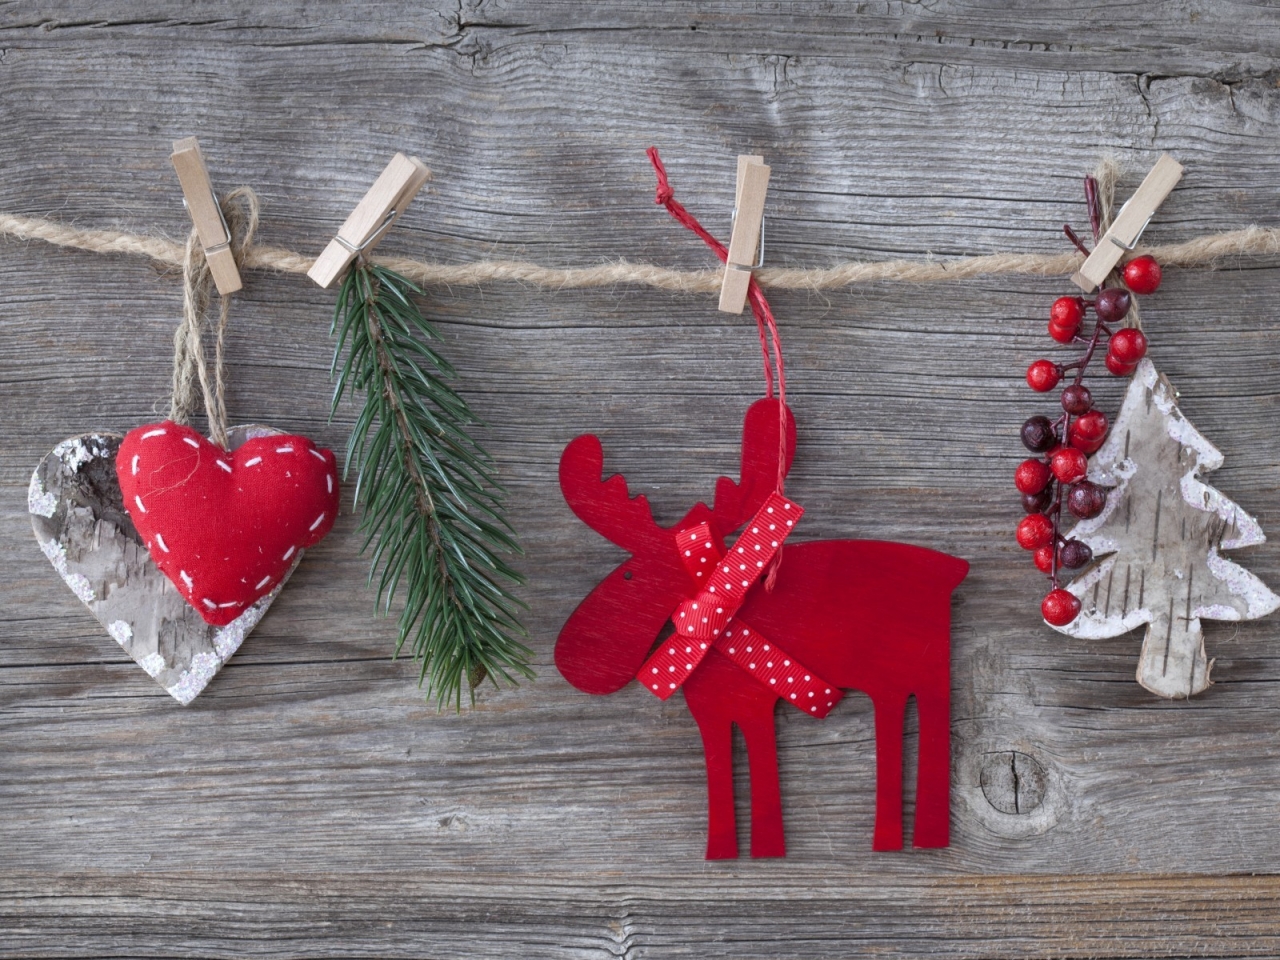 Handmade Ornaments for Christmas for 1280 x 960 resolution